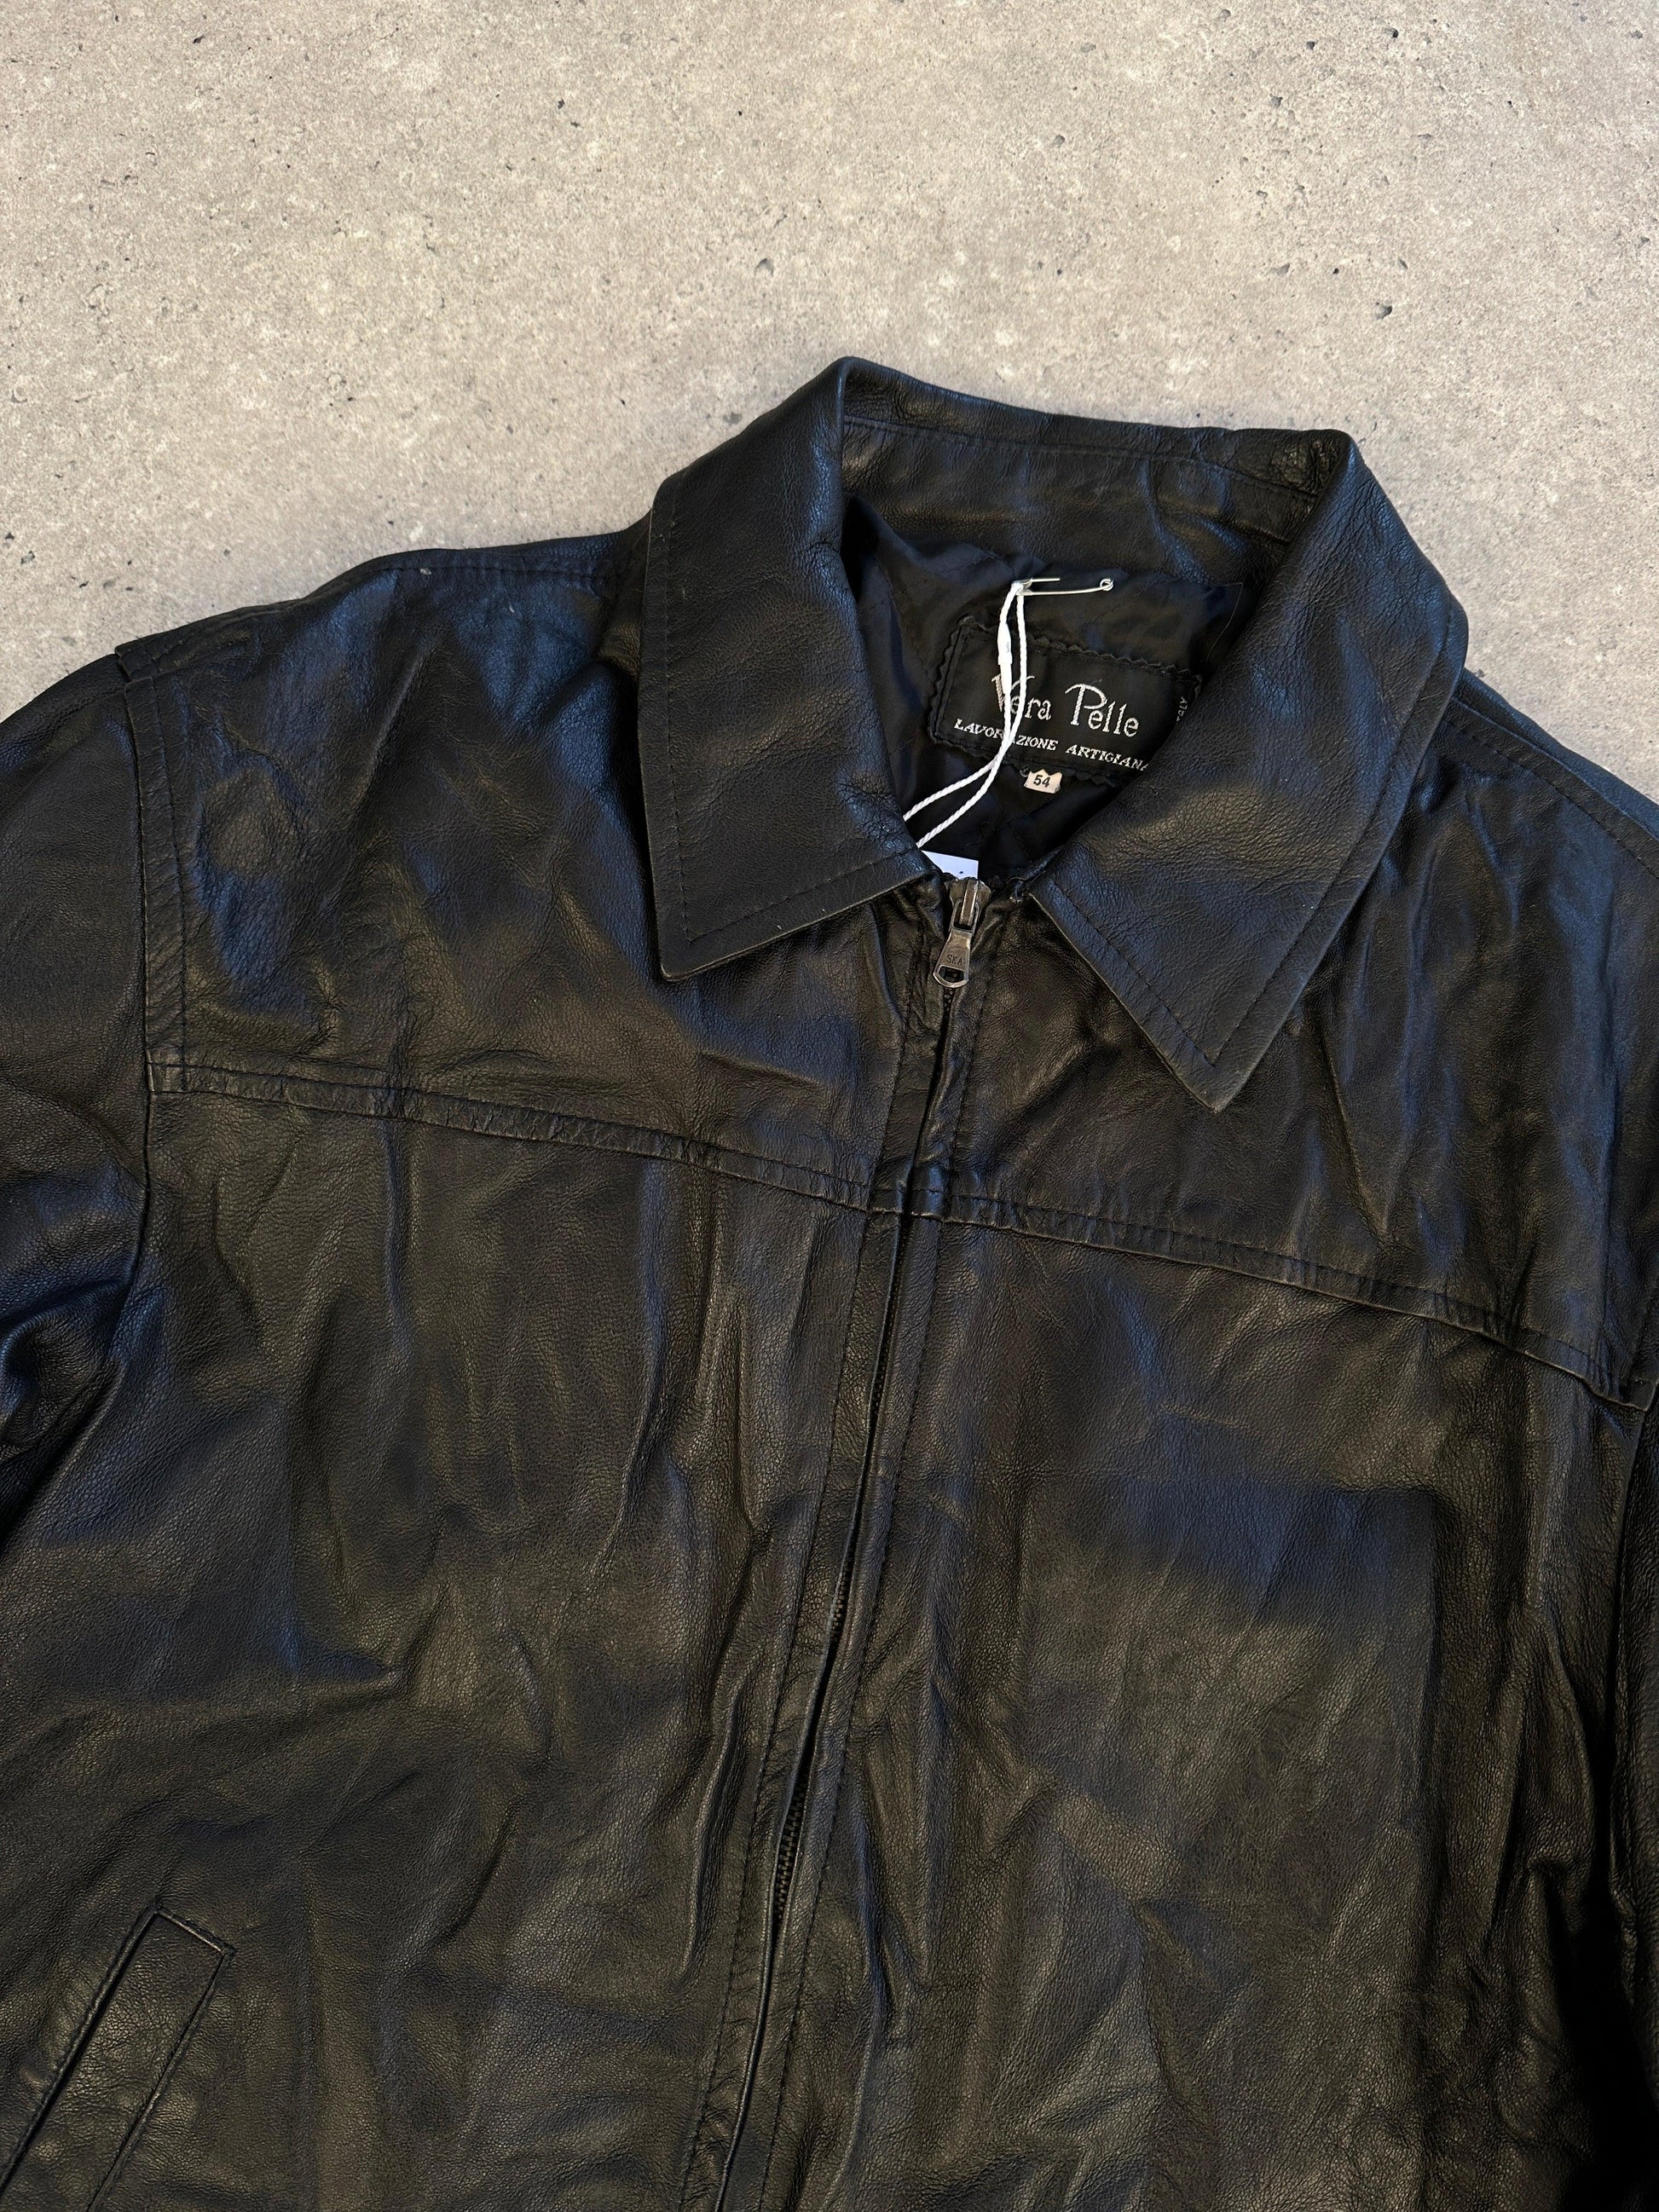 Vintage Zip Up Leather Jacket - M - Known Source